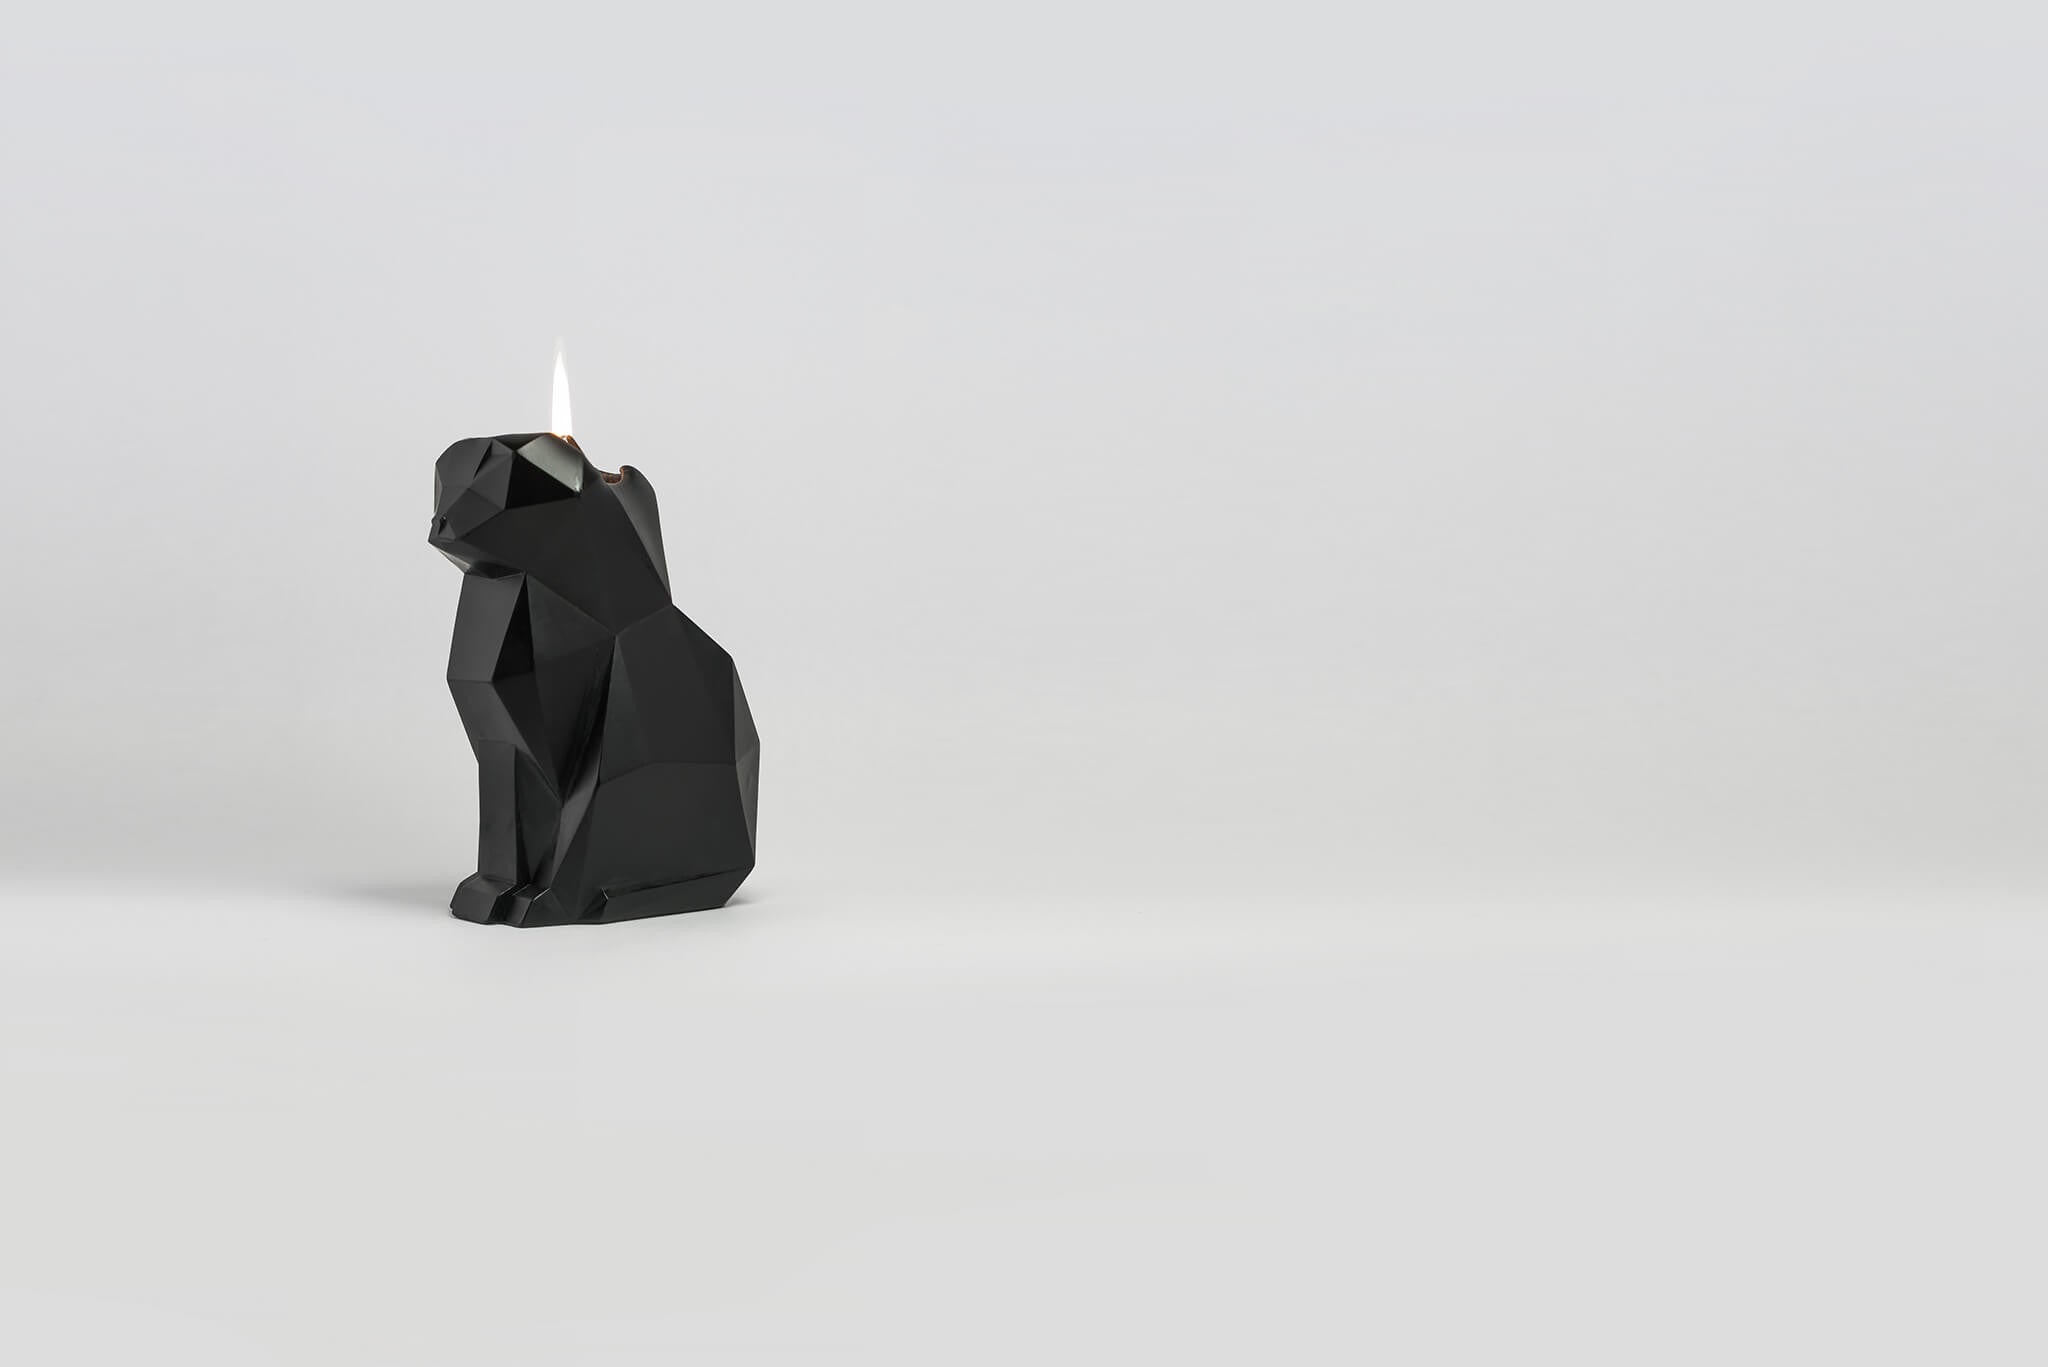 Melting black cat shaped candle has a secret skeleton to reveal after she is burned. 